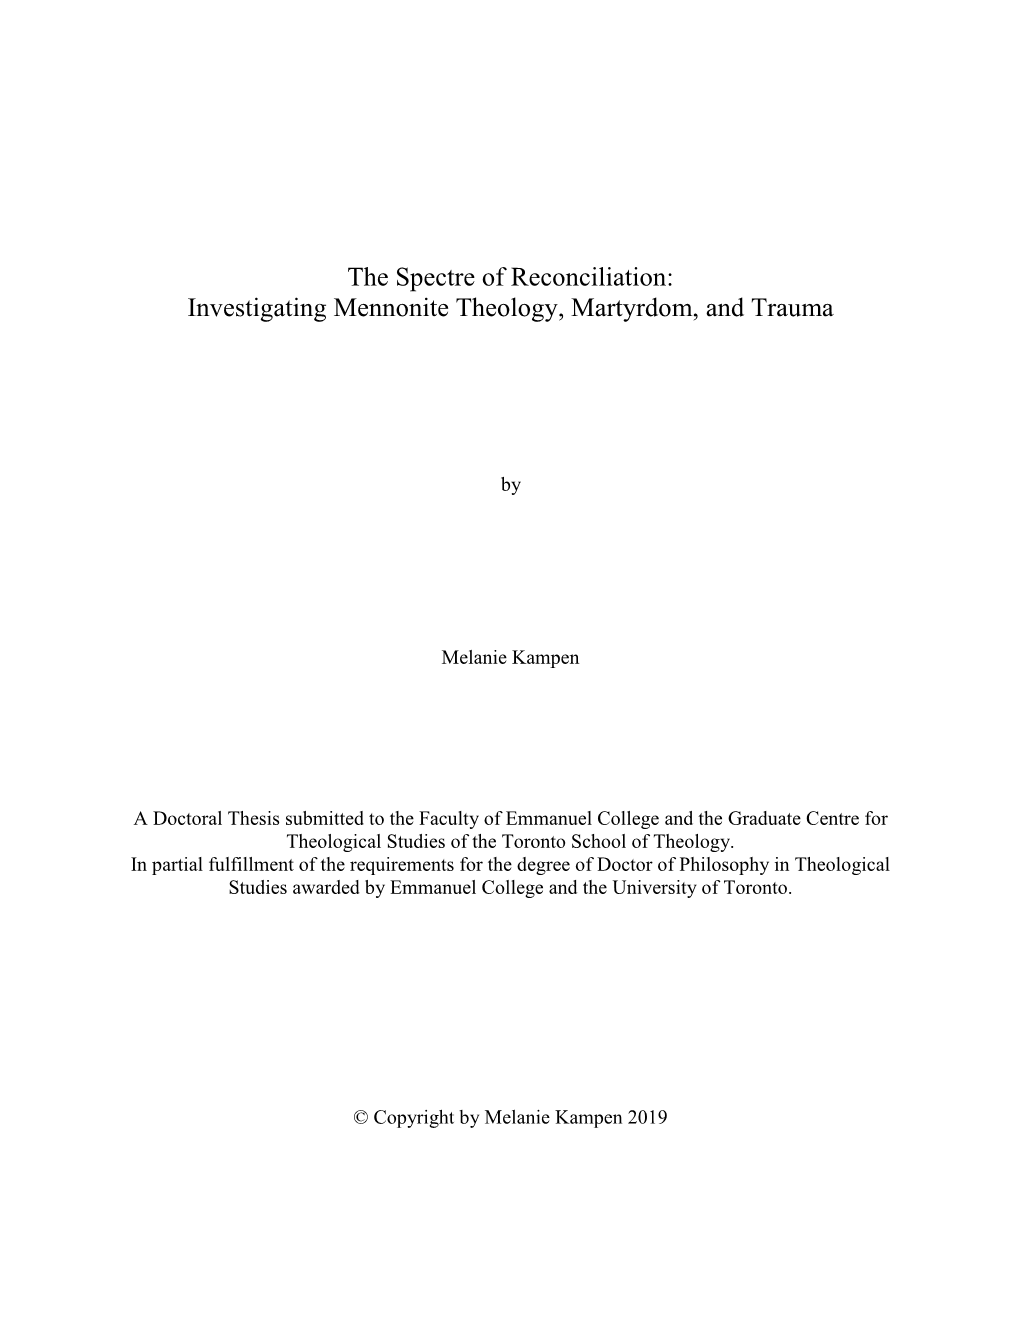 Investigating Mennonite Theology, Martyrdom, and Trauma